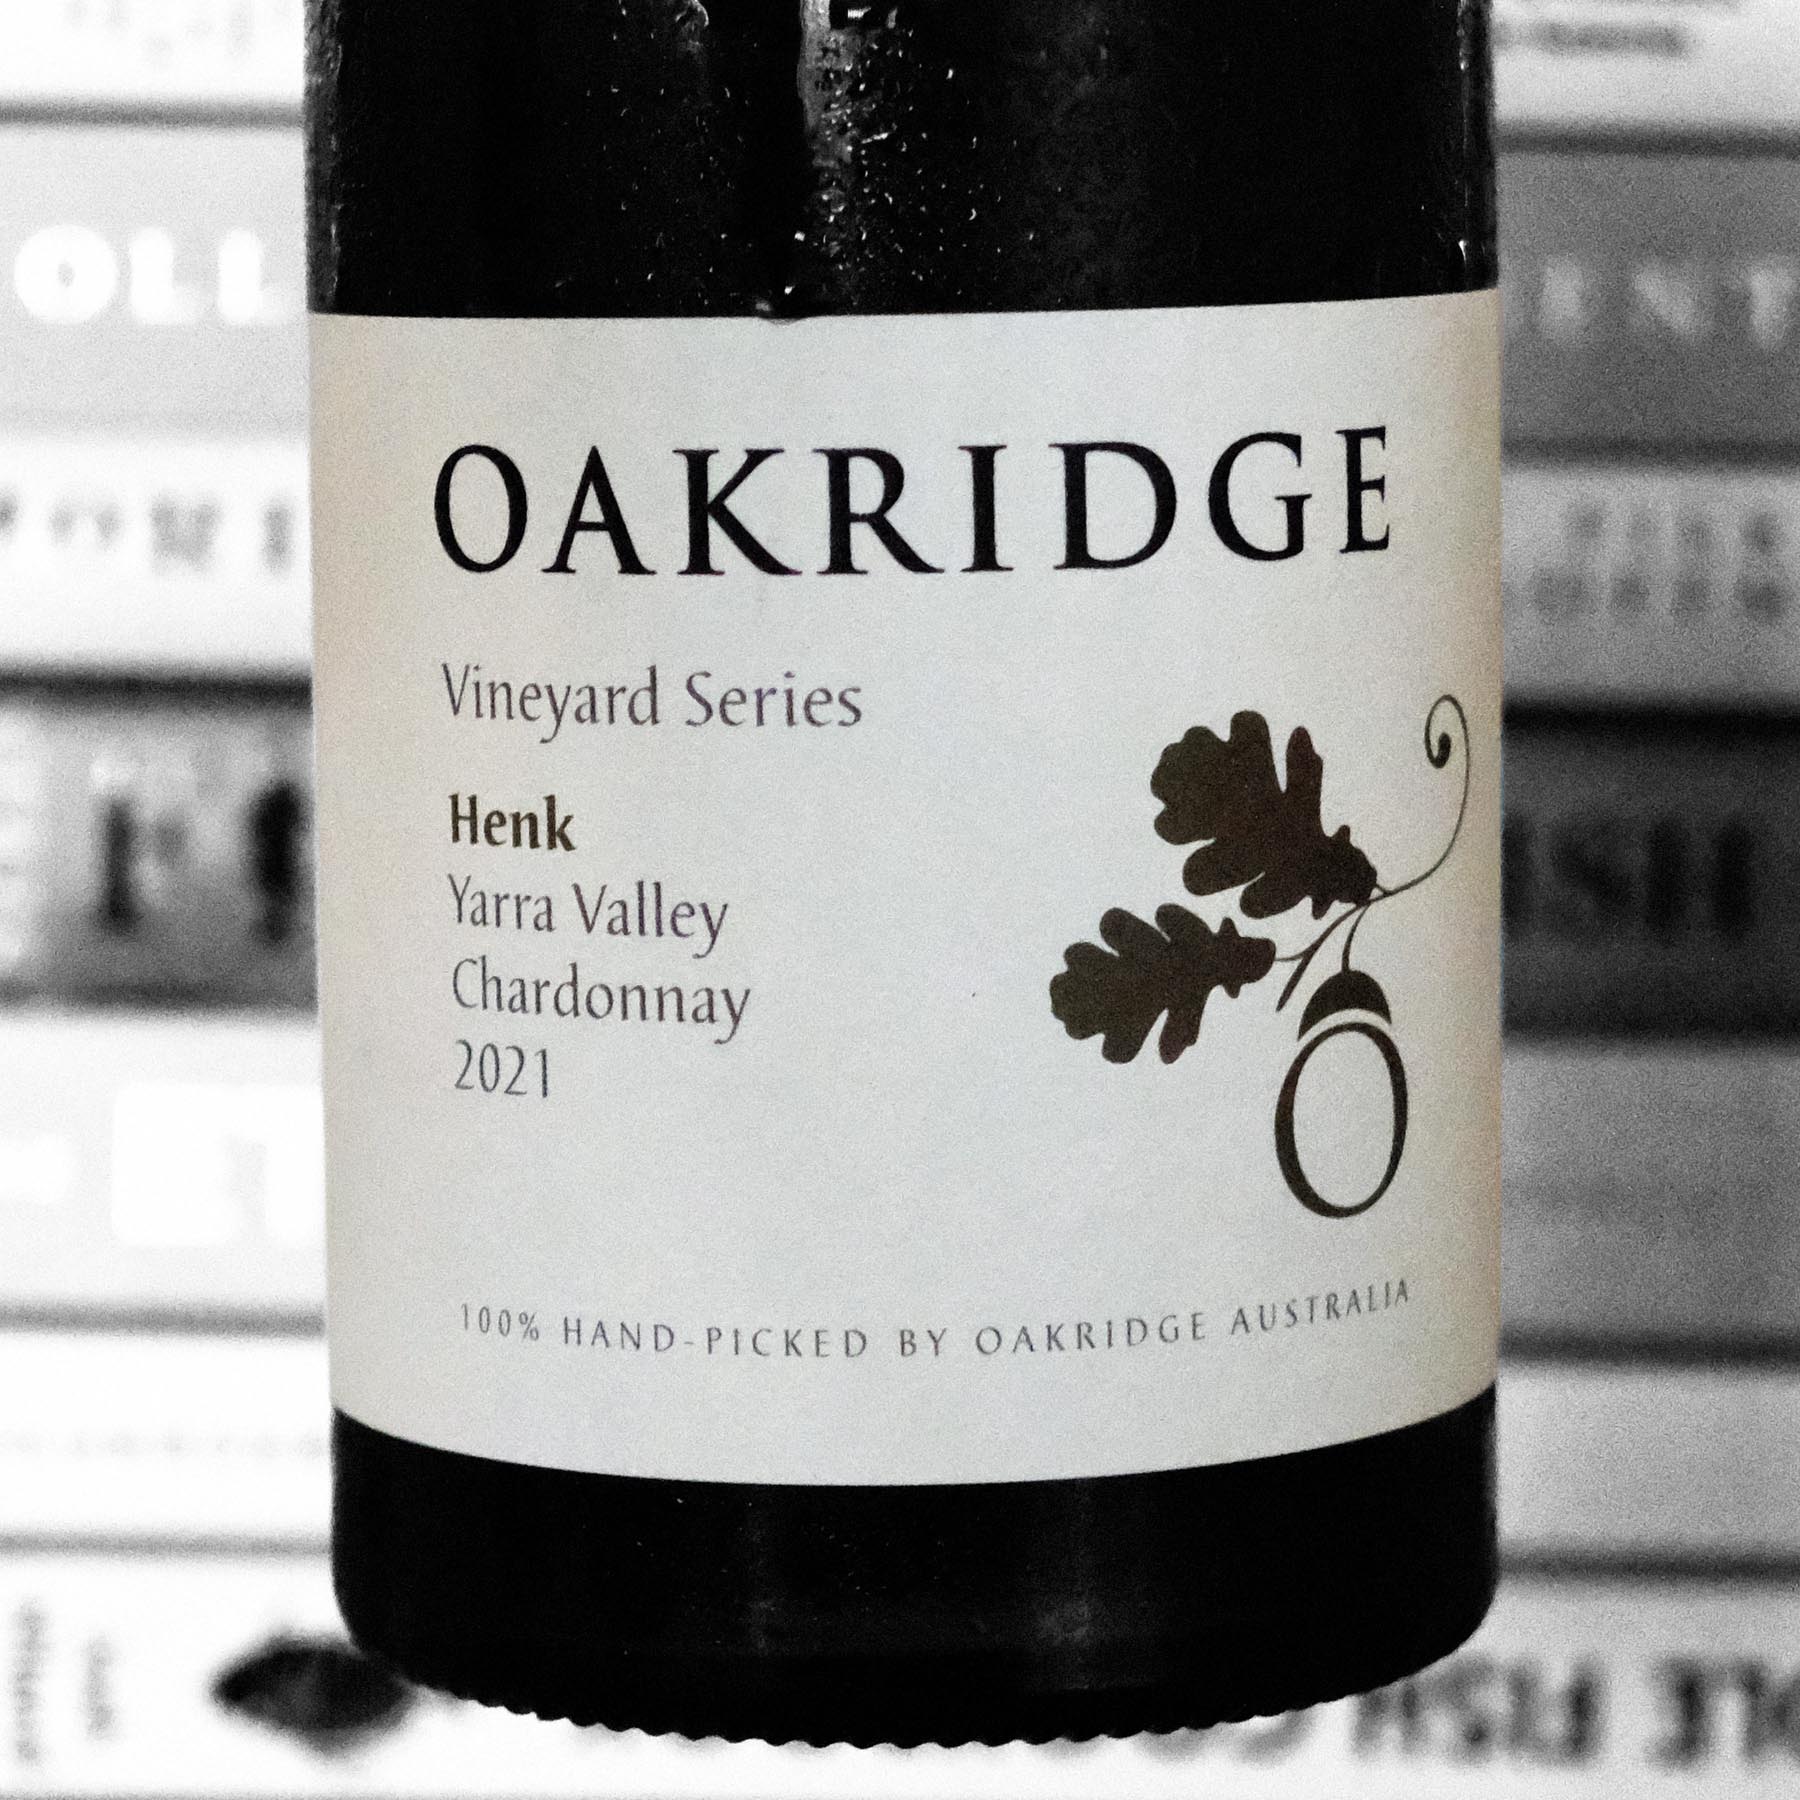 Oakridge Vineyard Series Henk Chardonnay 2021 Yarra Valley, Victoria